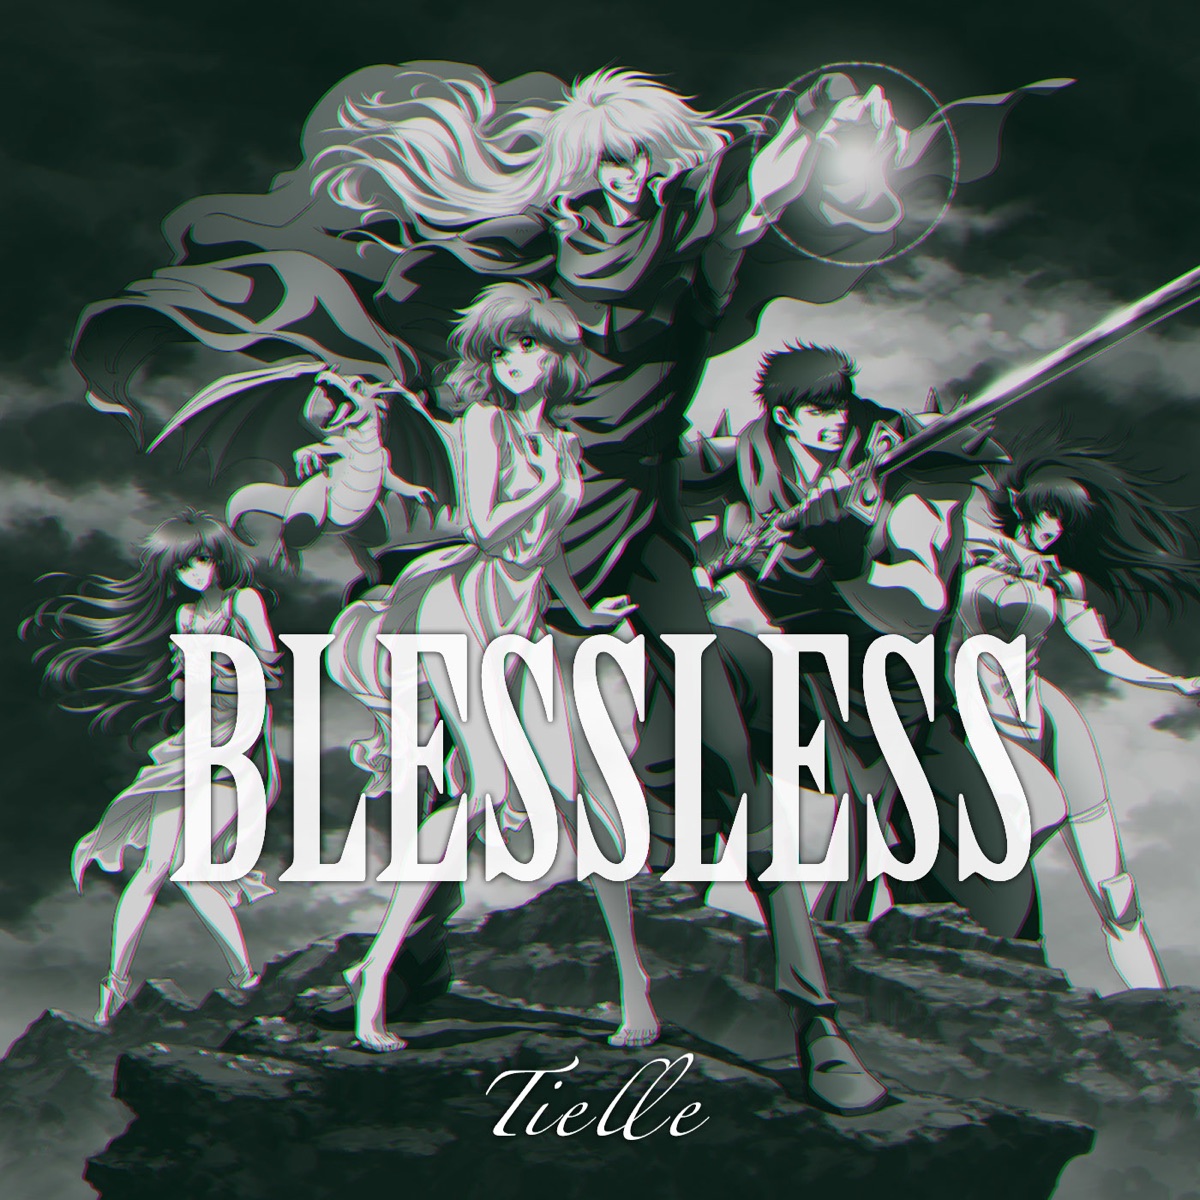 Cover art for『Tielle - BLESSLESS』from the release『BLESSLESS